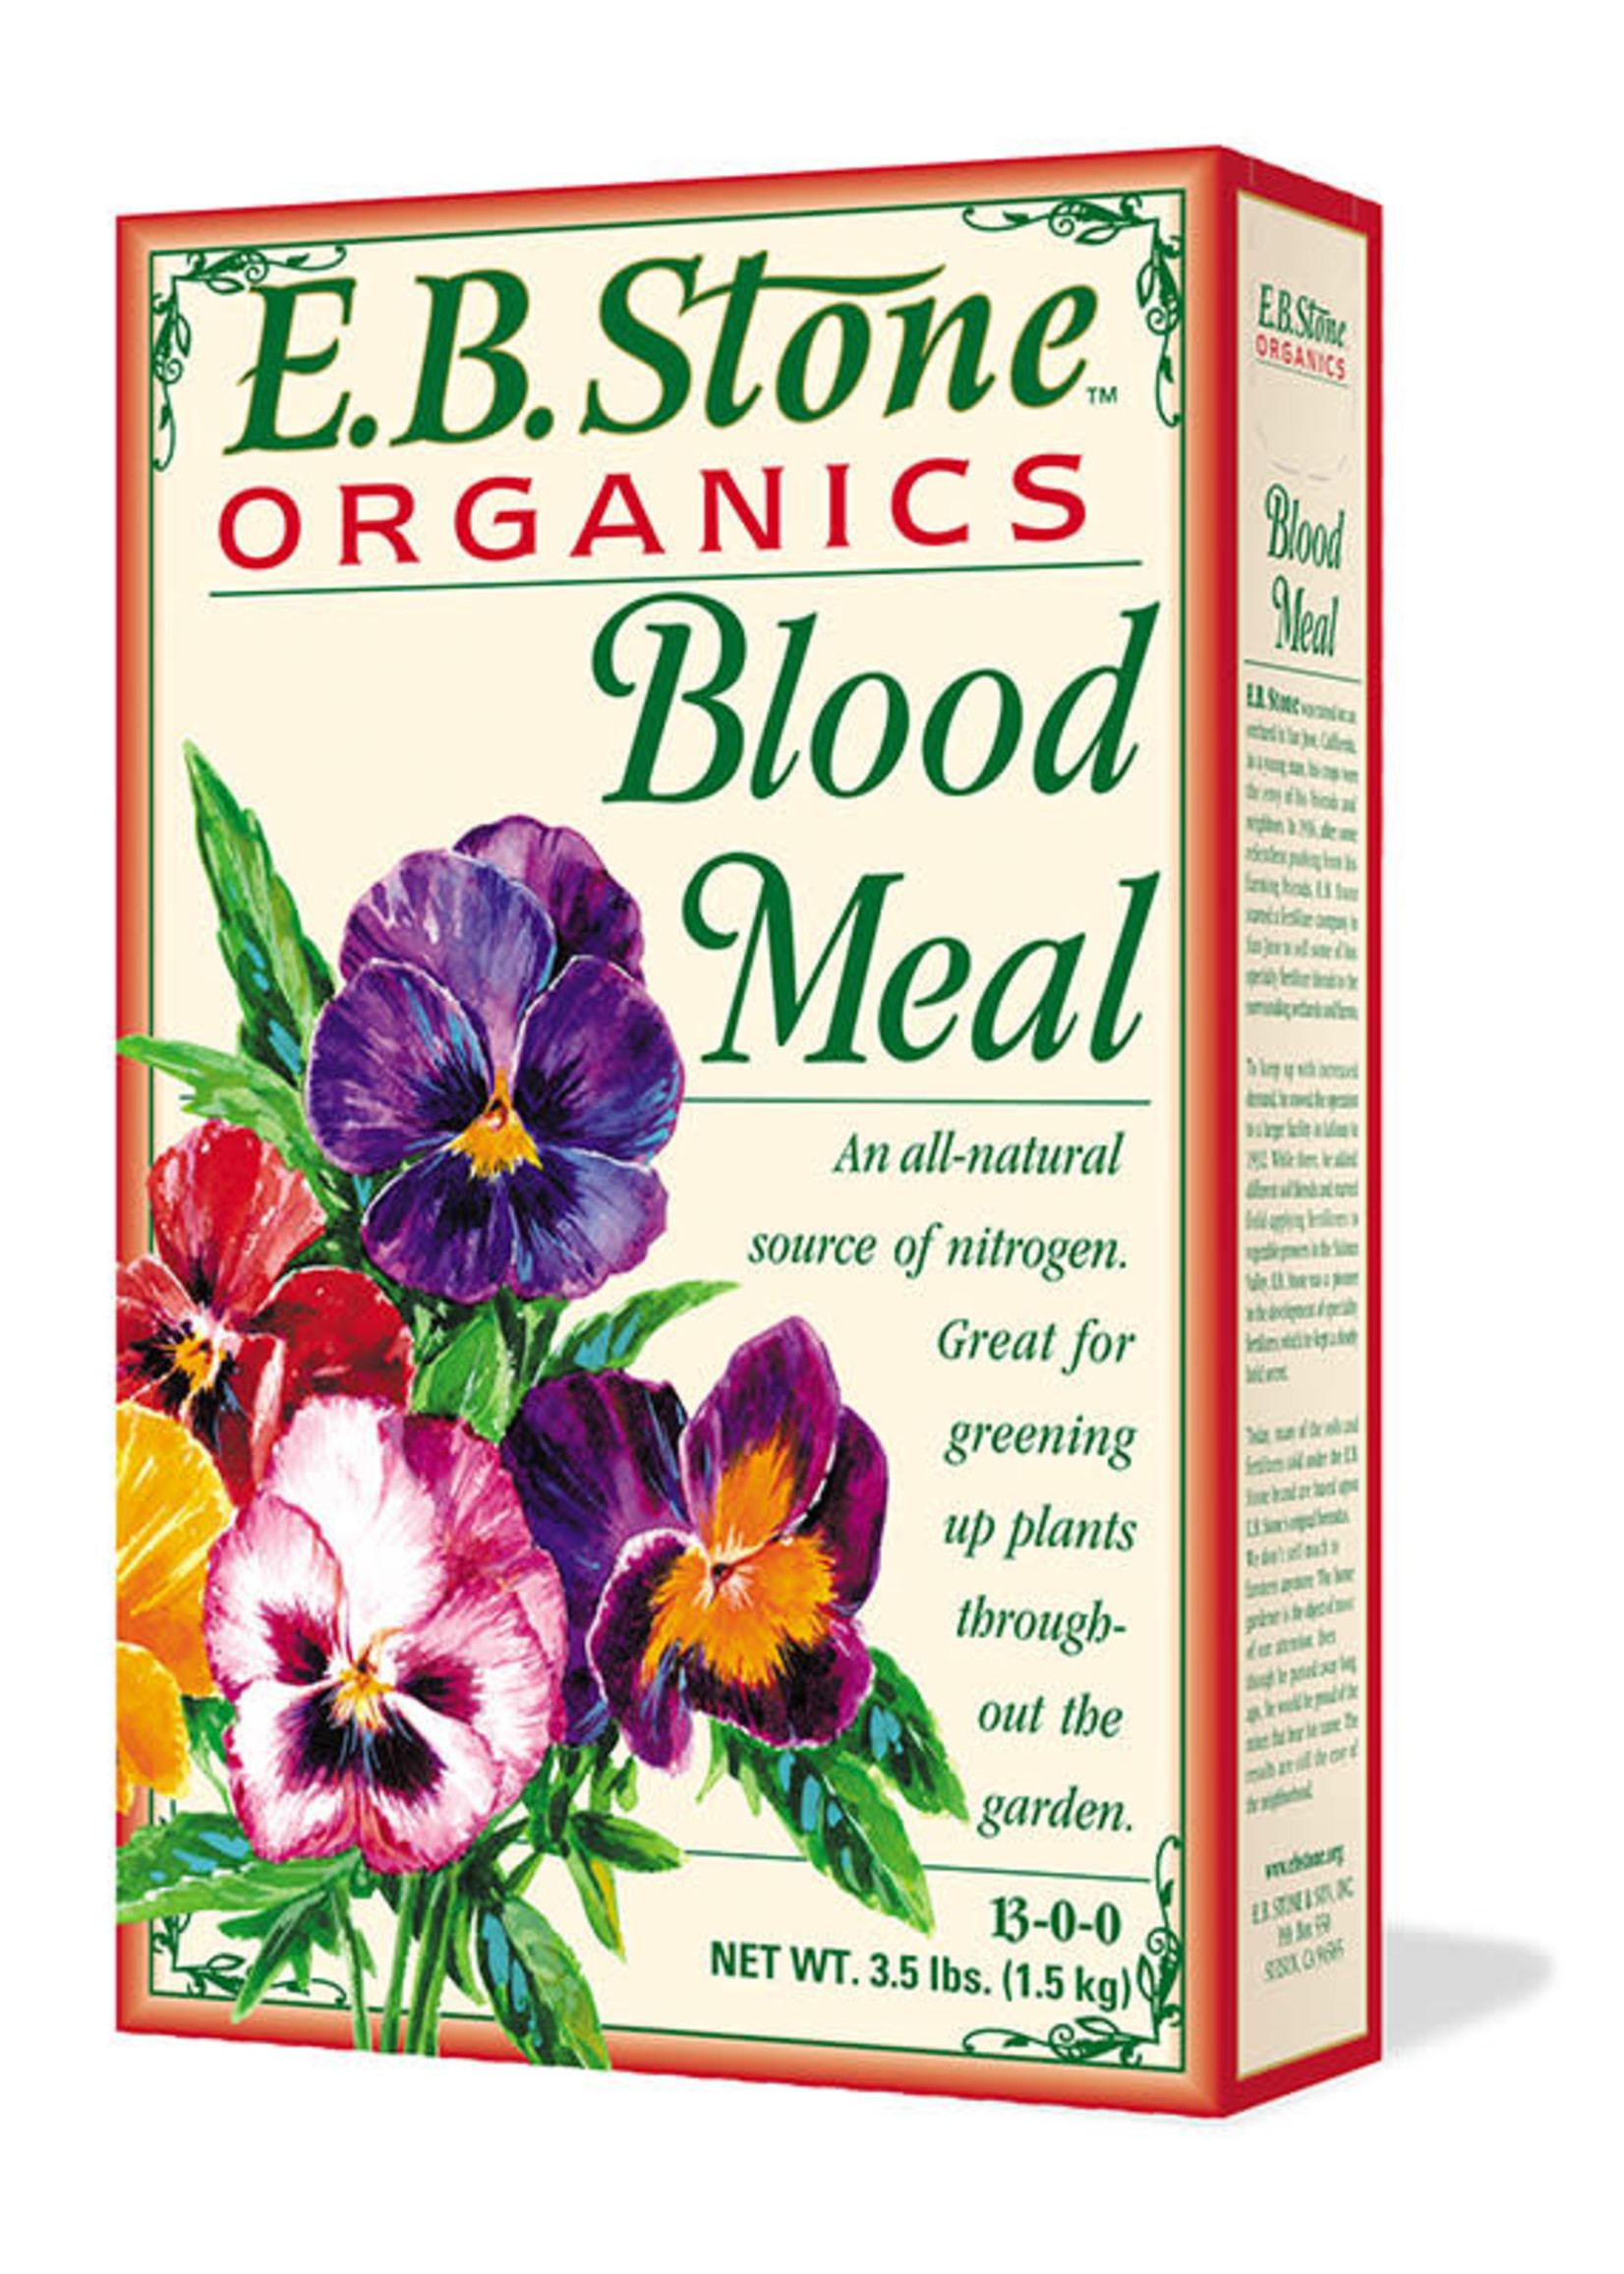 E.B. Stone Organics E.B. Stone Blood Meal 13-0-0